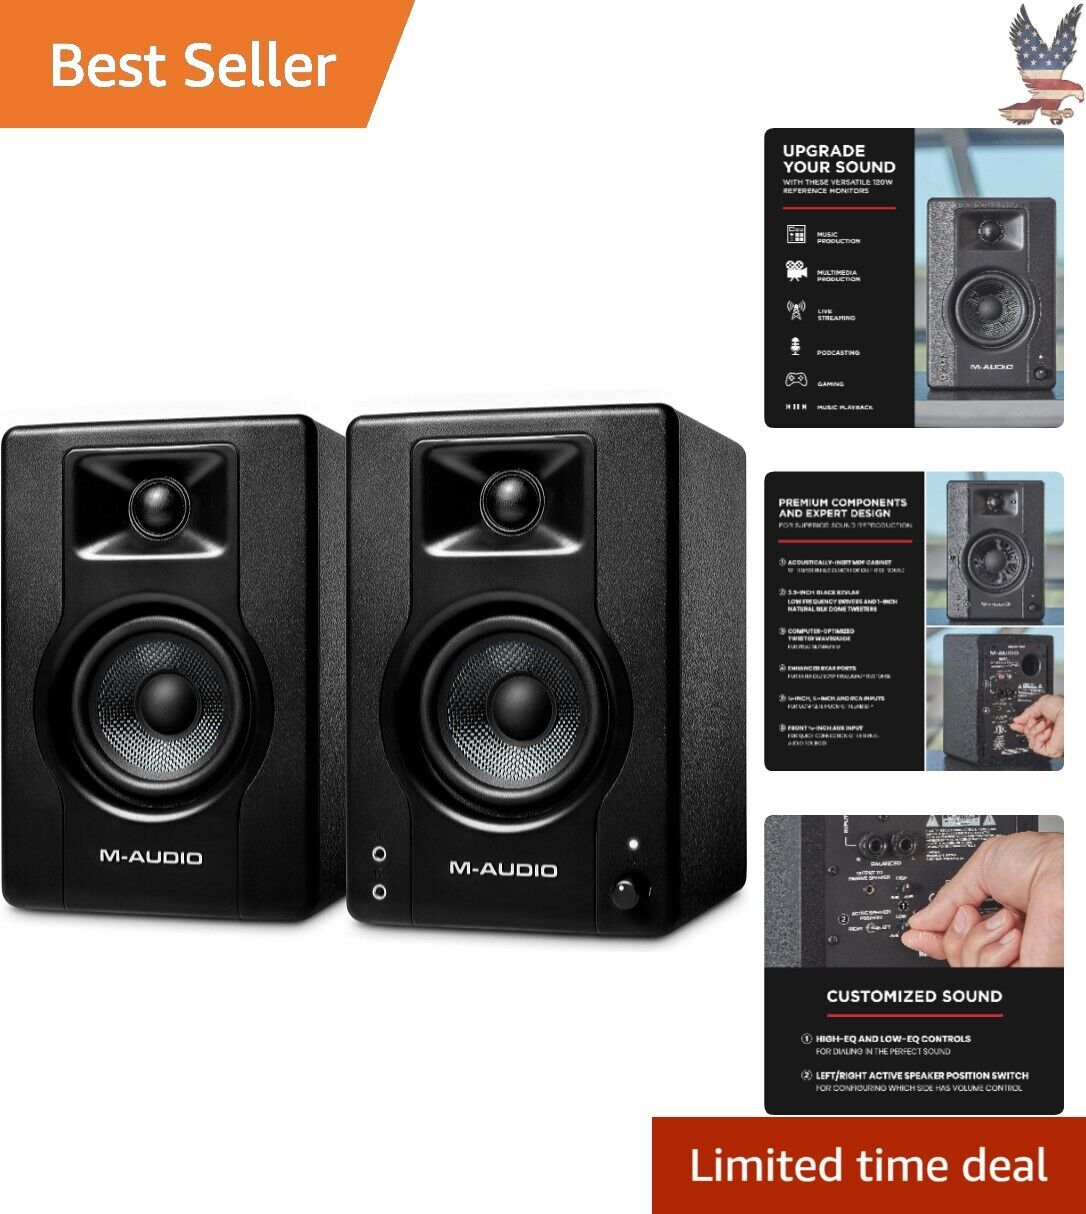 Premium Versatile Studio Monitor Speakers with Crystal-Clear Sound - 120W - Pair